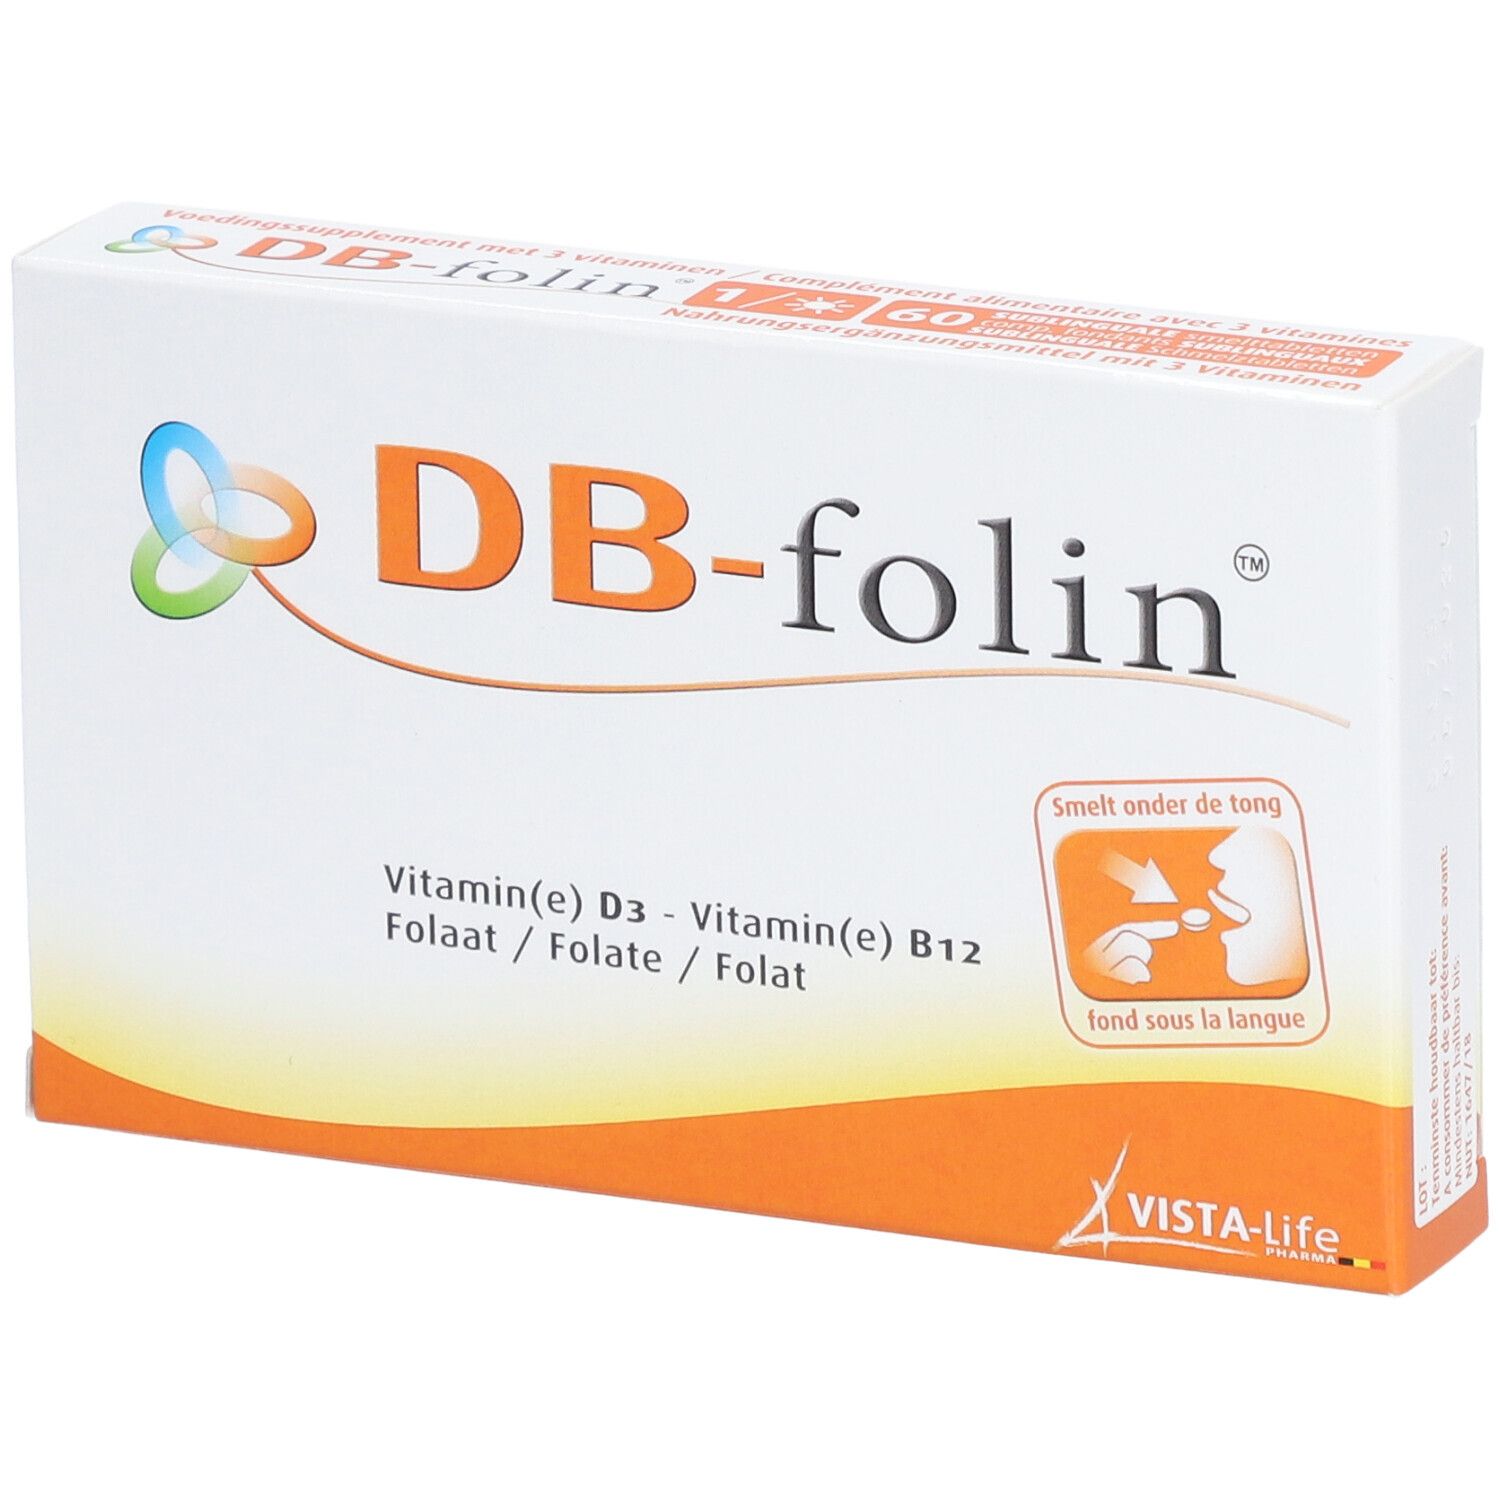 Image of Blick DB-Folin®